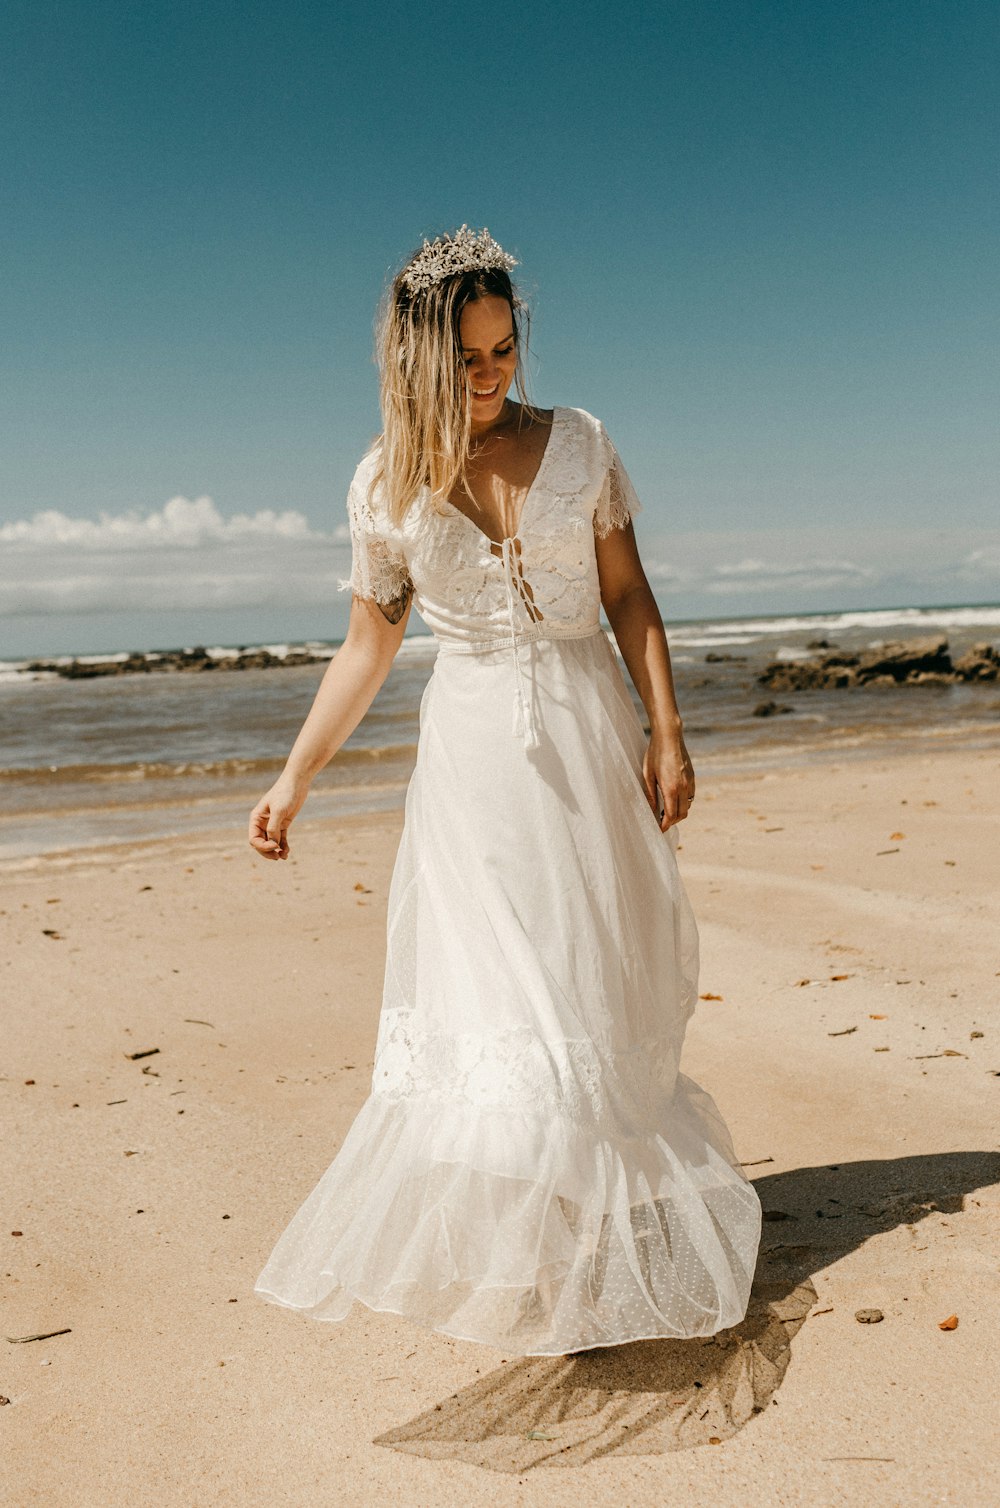 woman wearing white wedding dress